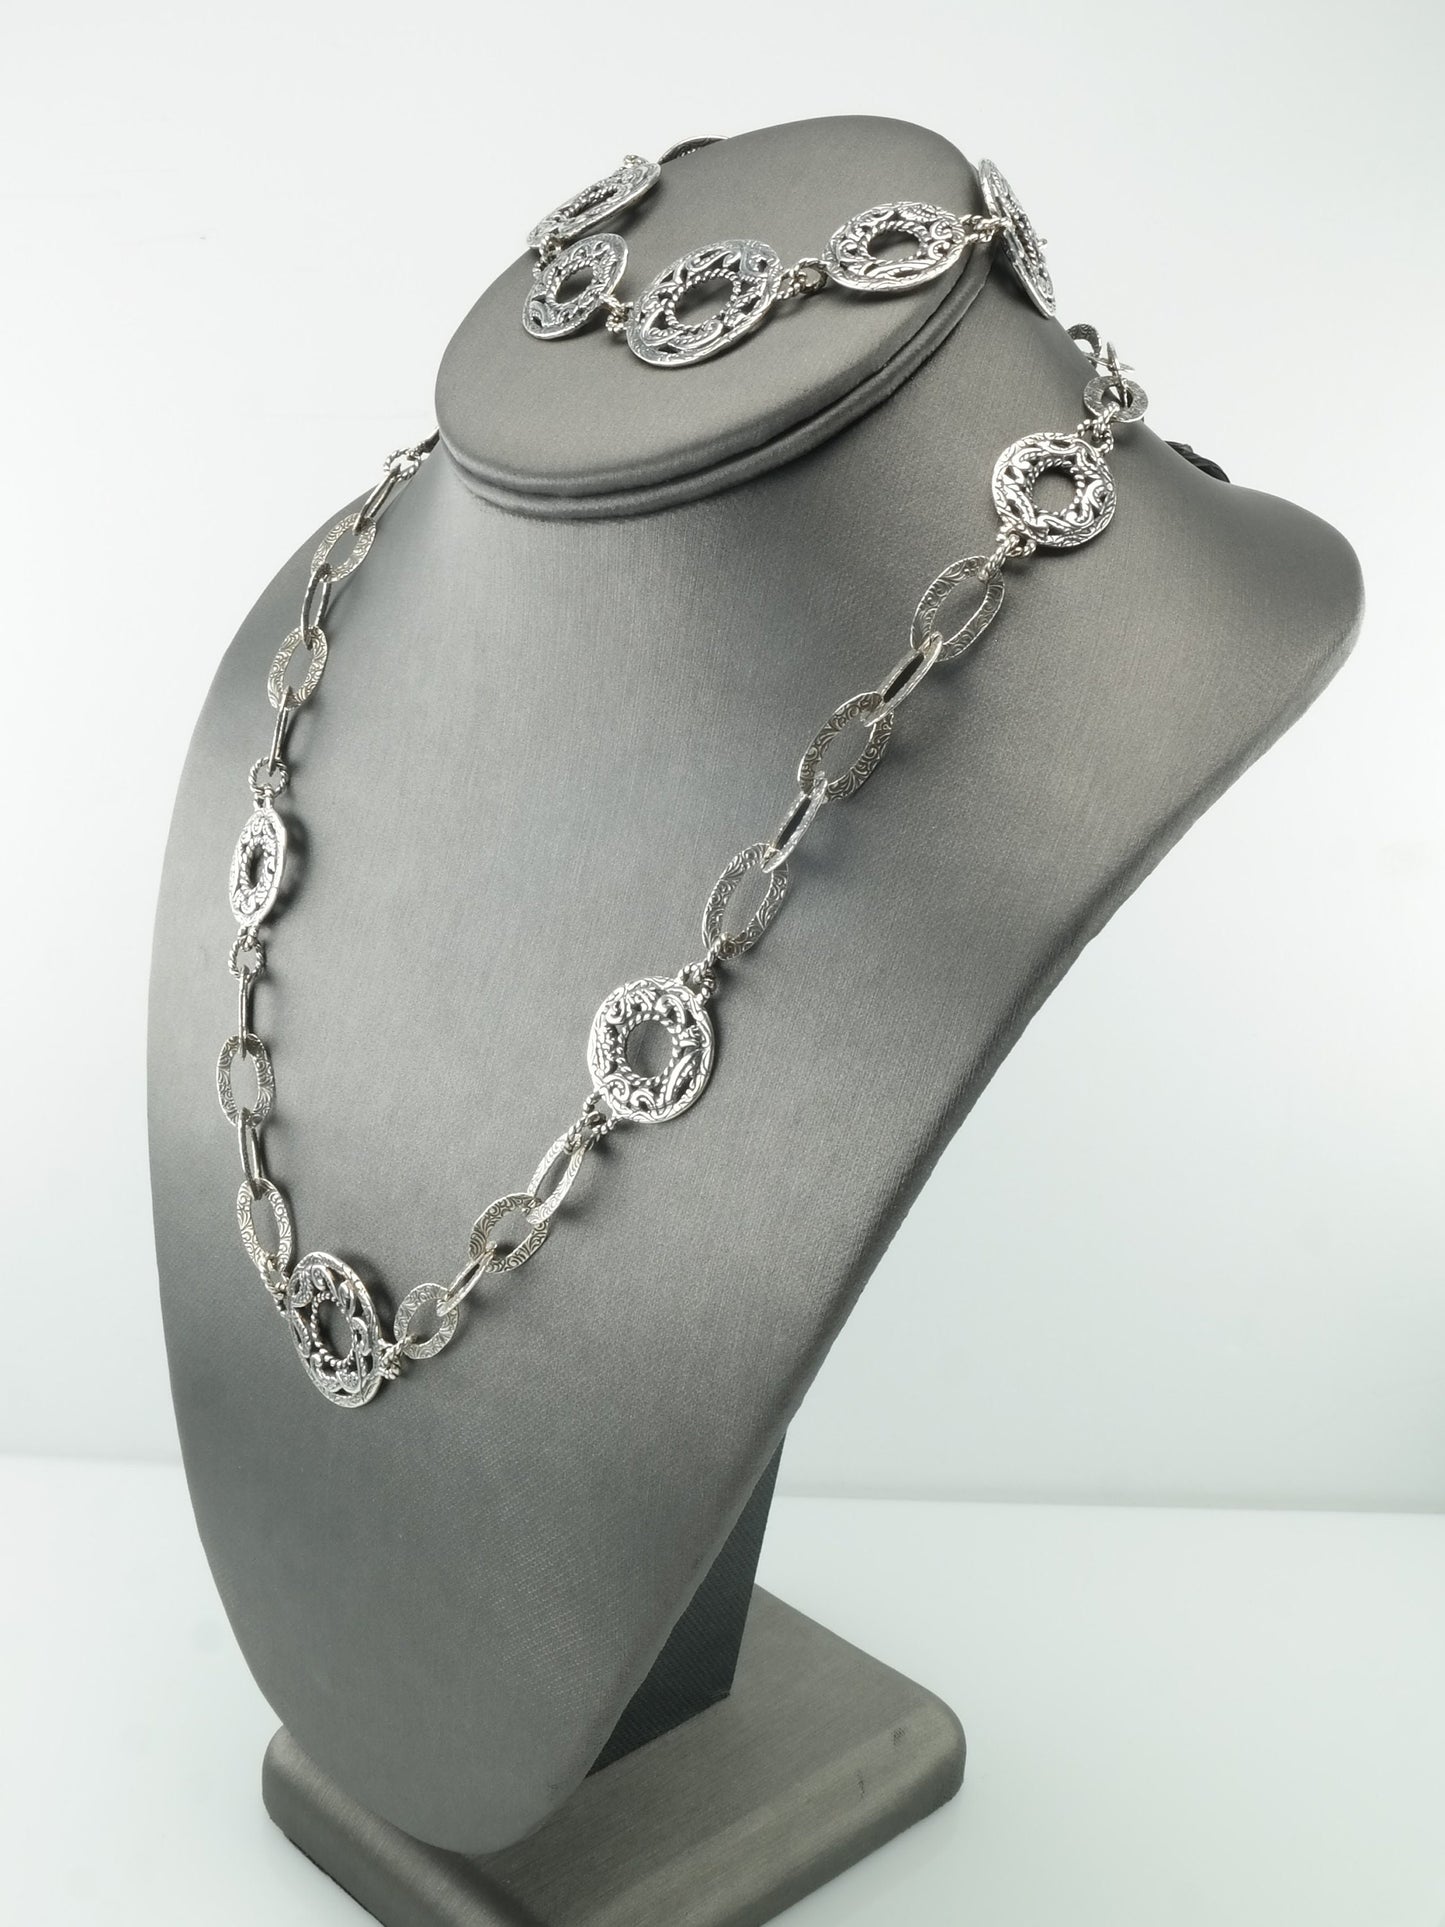 Vintage Carolyn Pollack Sterling Silver Filigree Scrollwork Relios Necklace And Bracelet